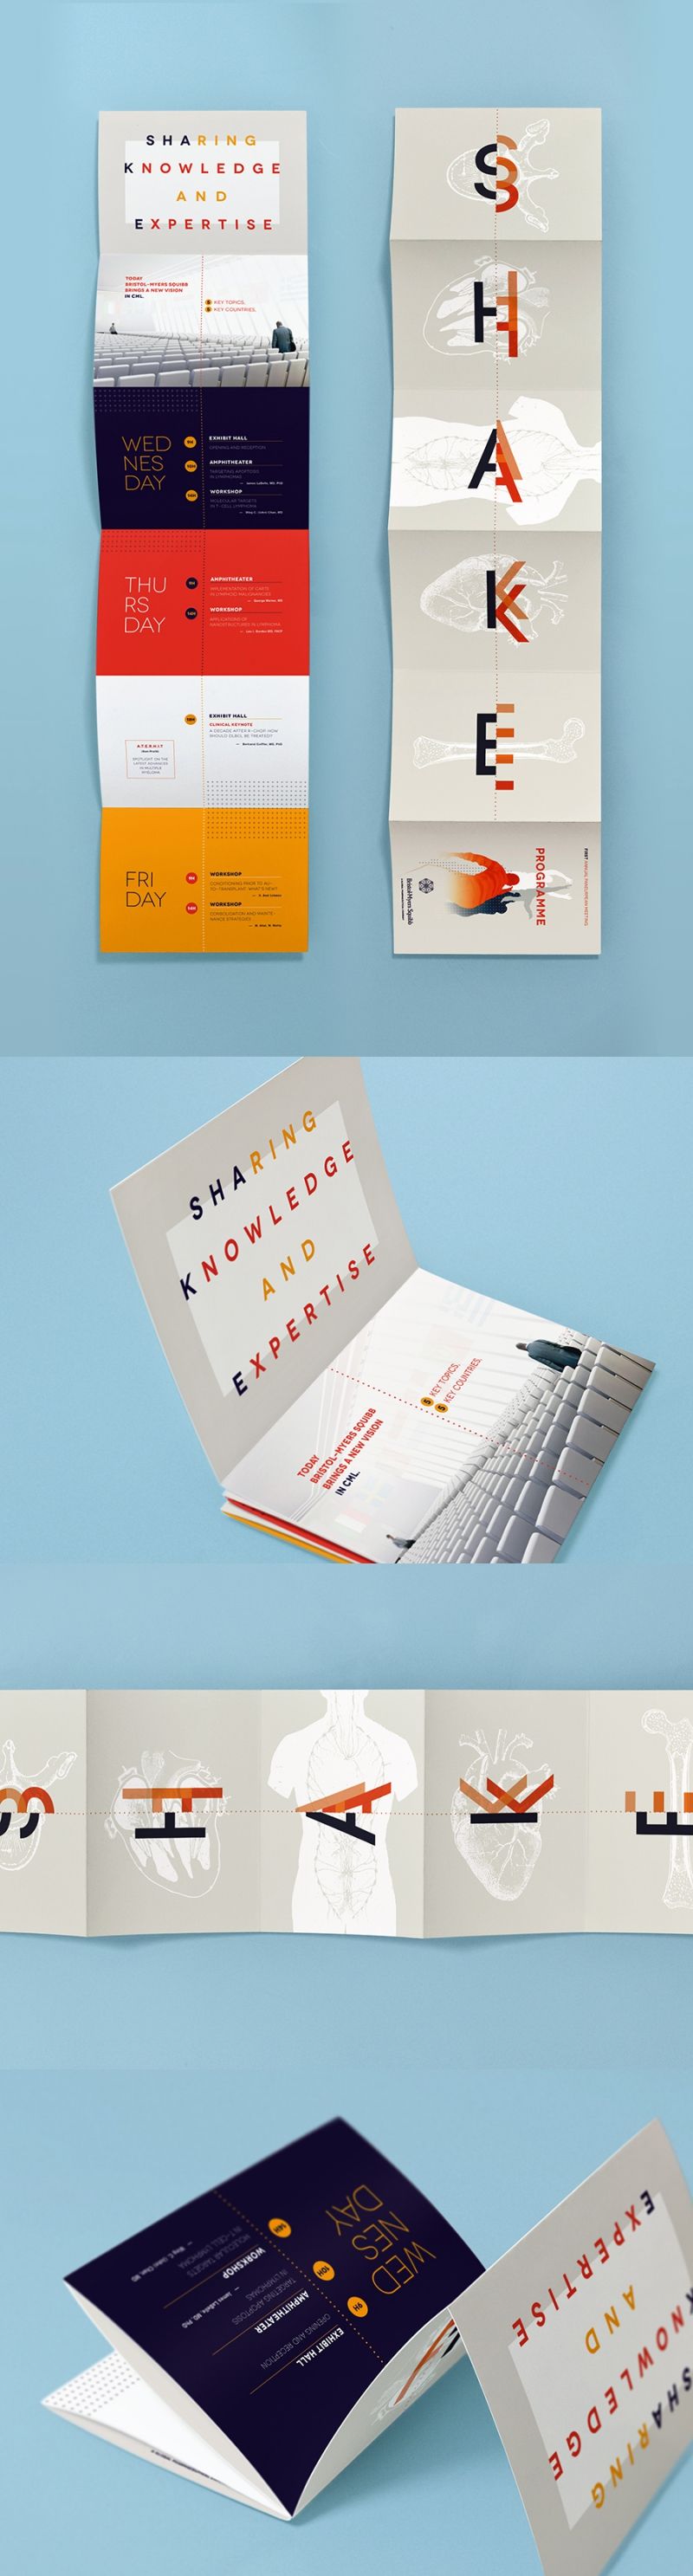 11 Creative Handmade Brochure Ideas for Inspiration